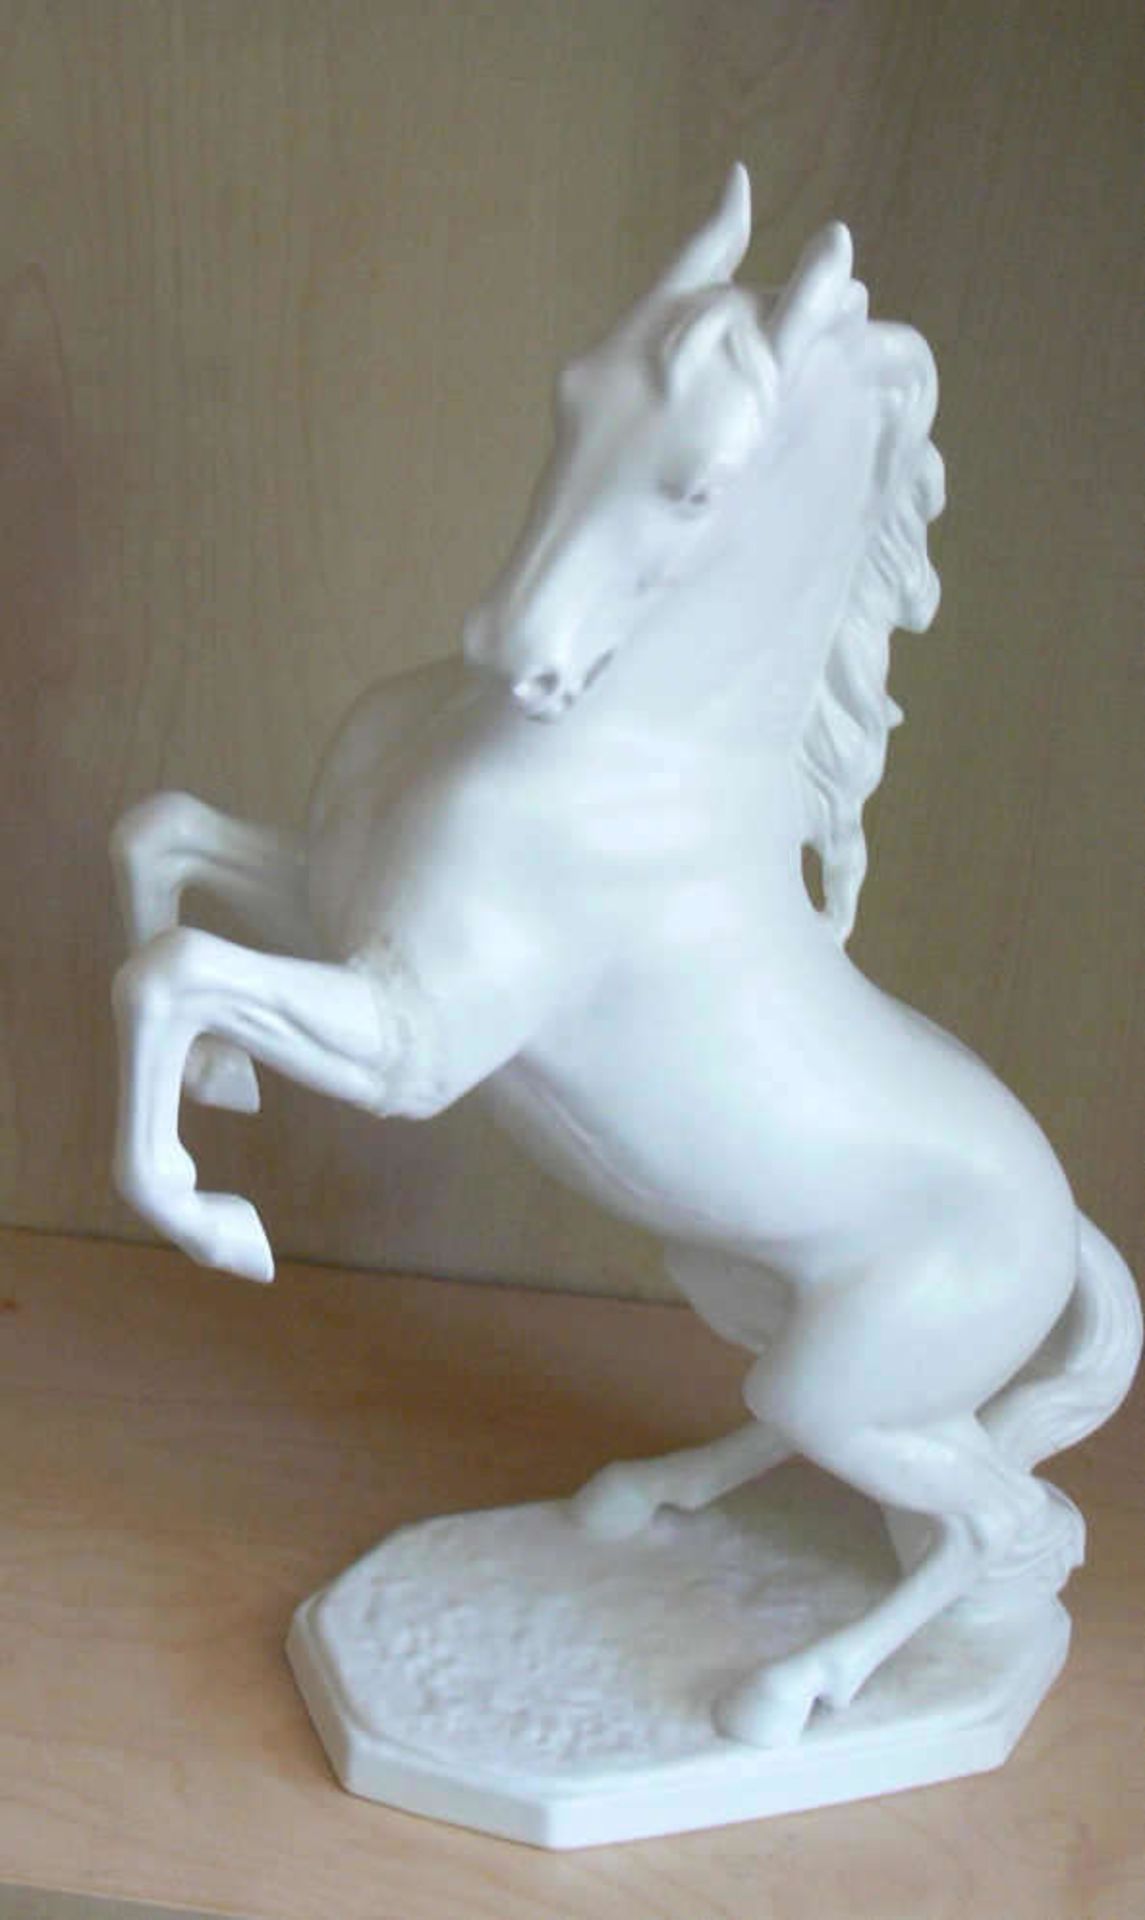 Goebel Porzellanpferd, signiert 3311 A, 1 Bein geklebt. Höhe ca. 32 cm. Goebel porcelain horse,